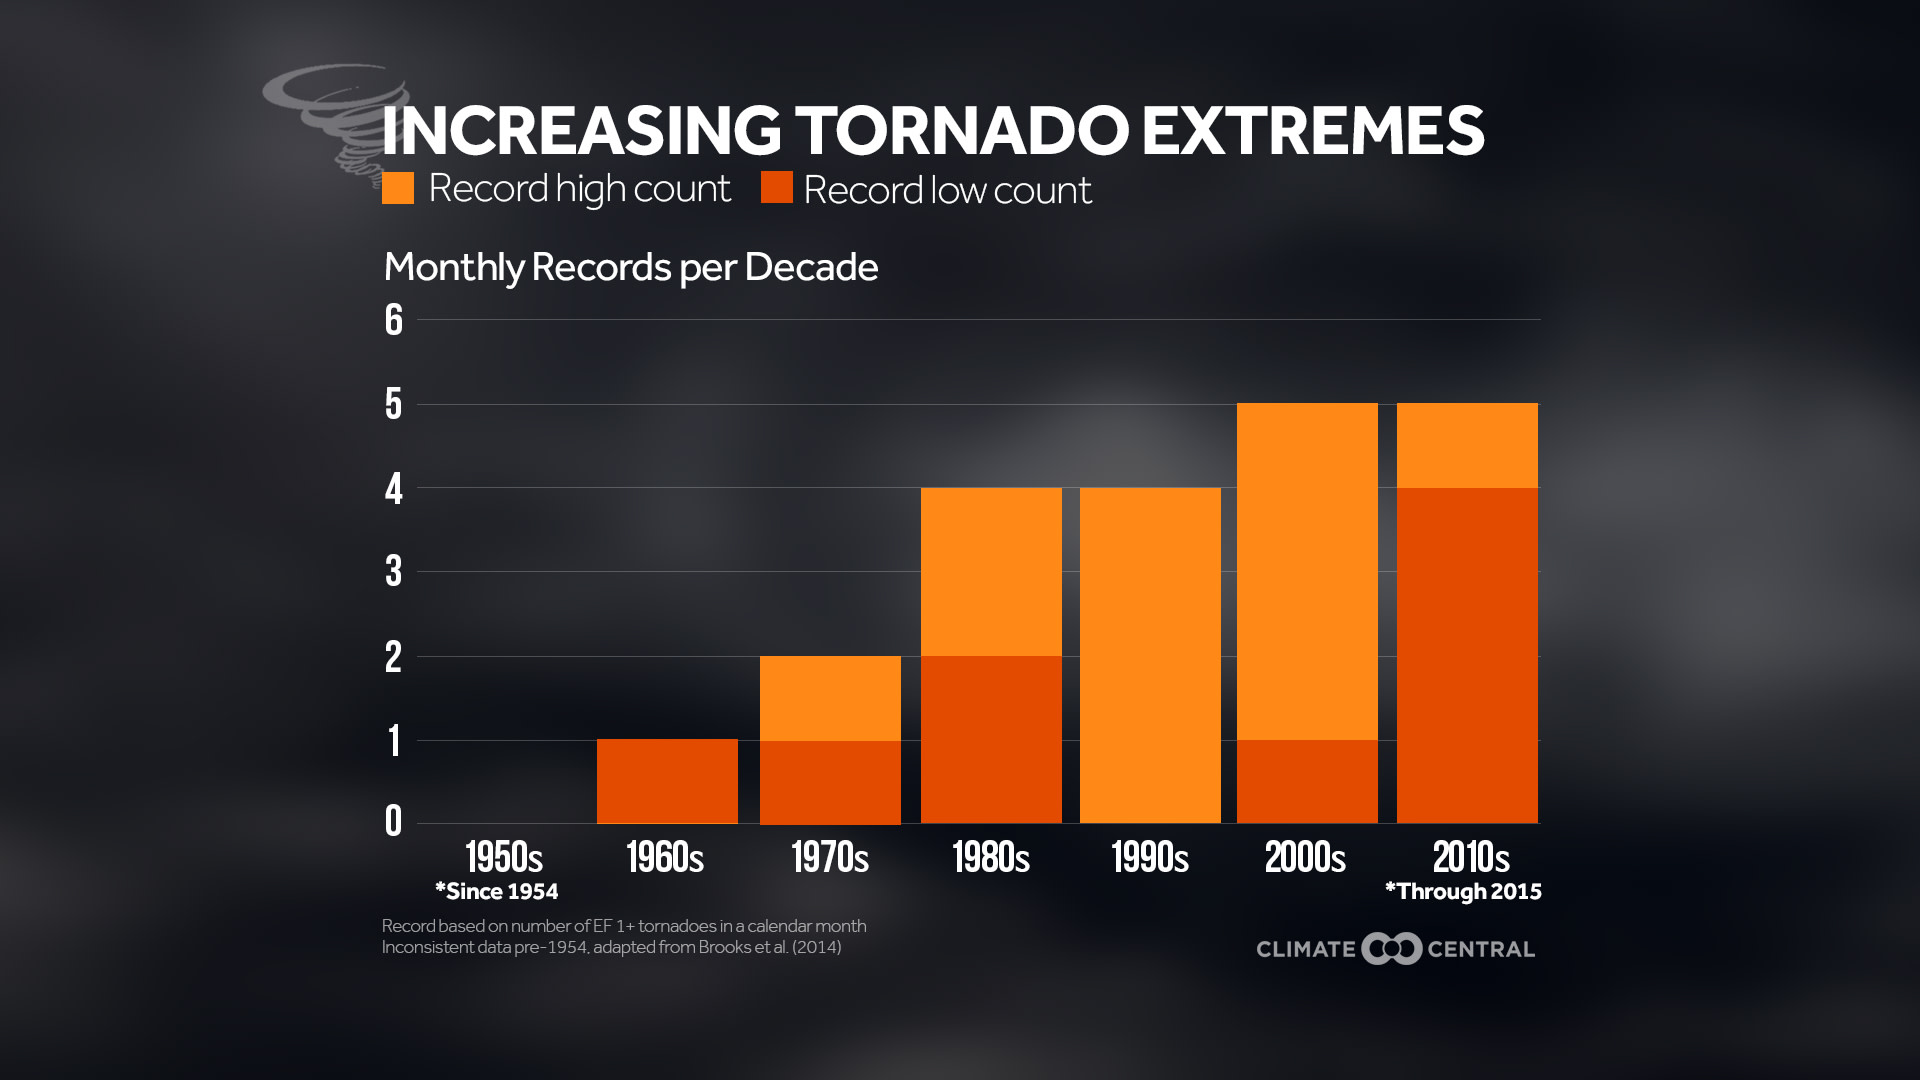 Set 3 - Tornadoes & Climate Change